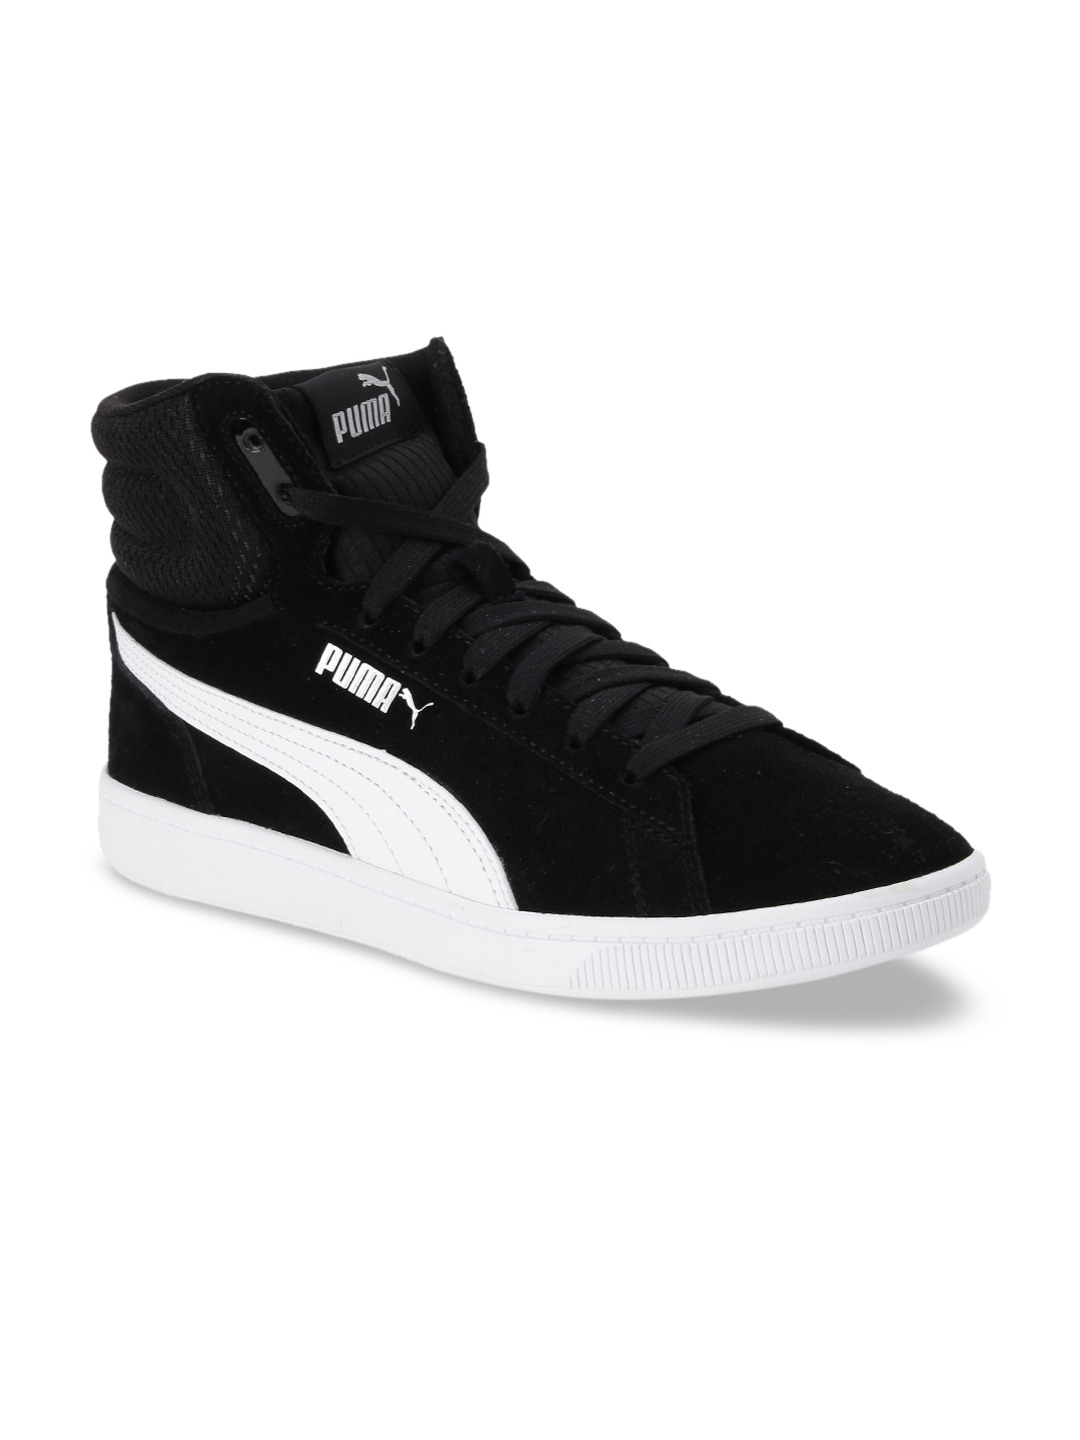 Buy Puma Women Black Sneakers - Casual Shoes for Women 10262207 | Myntra